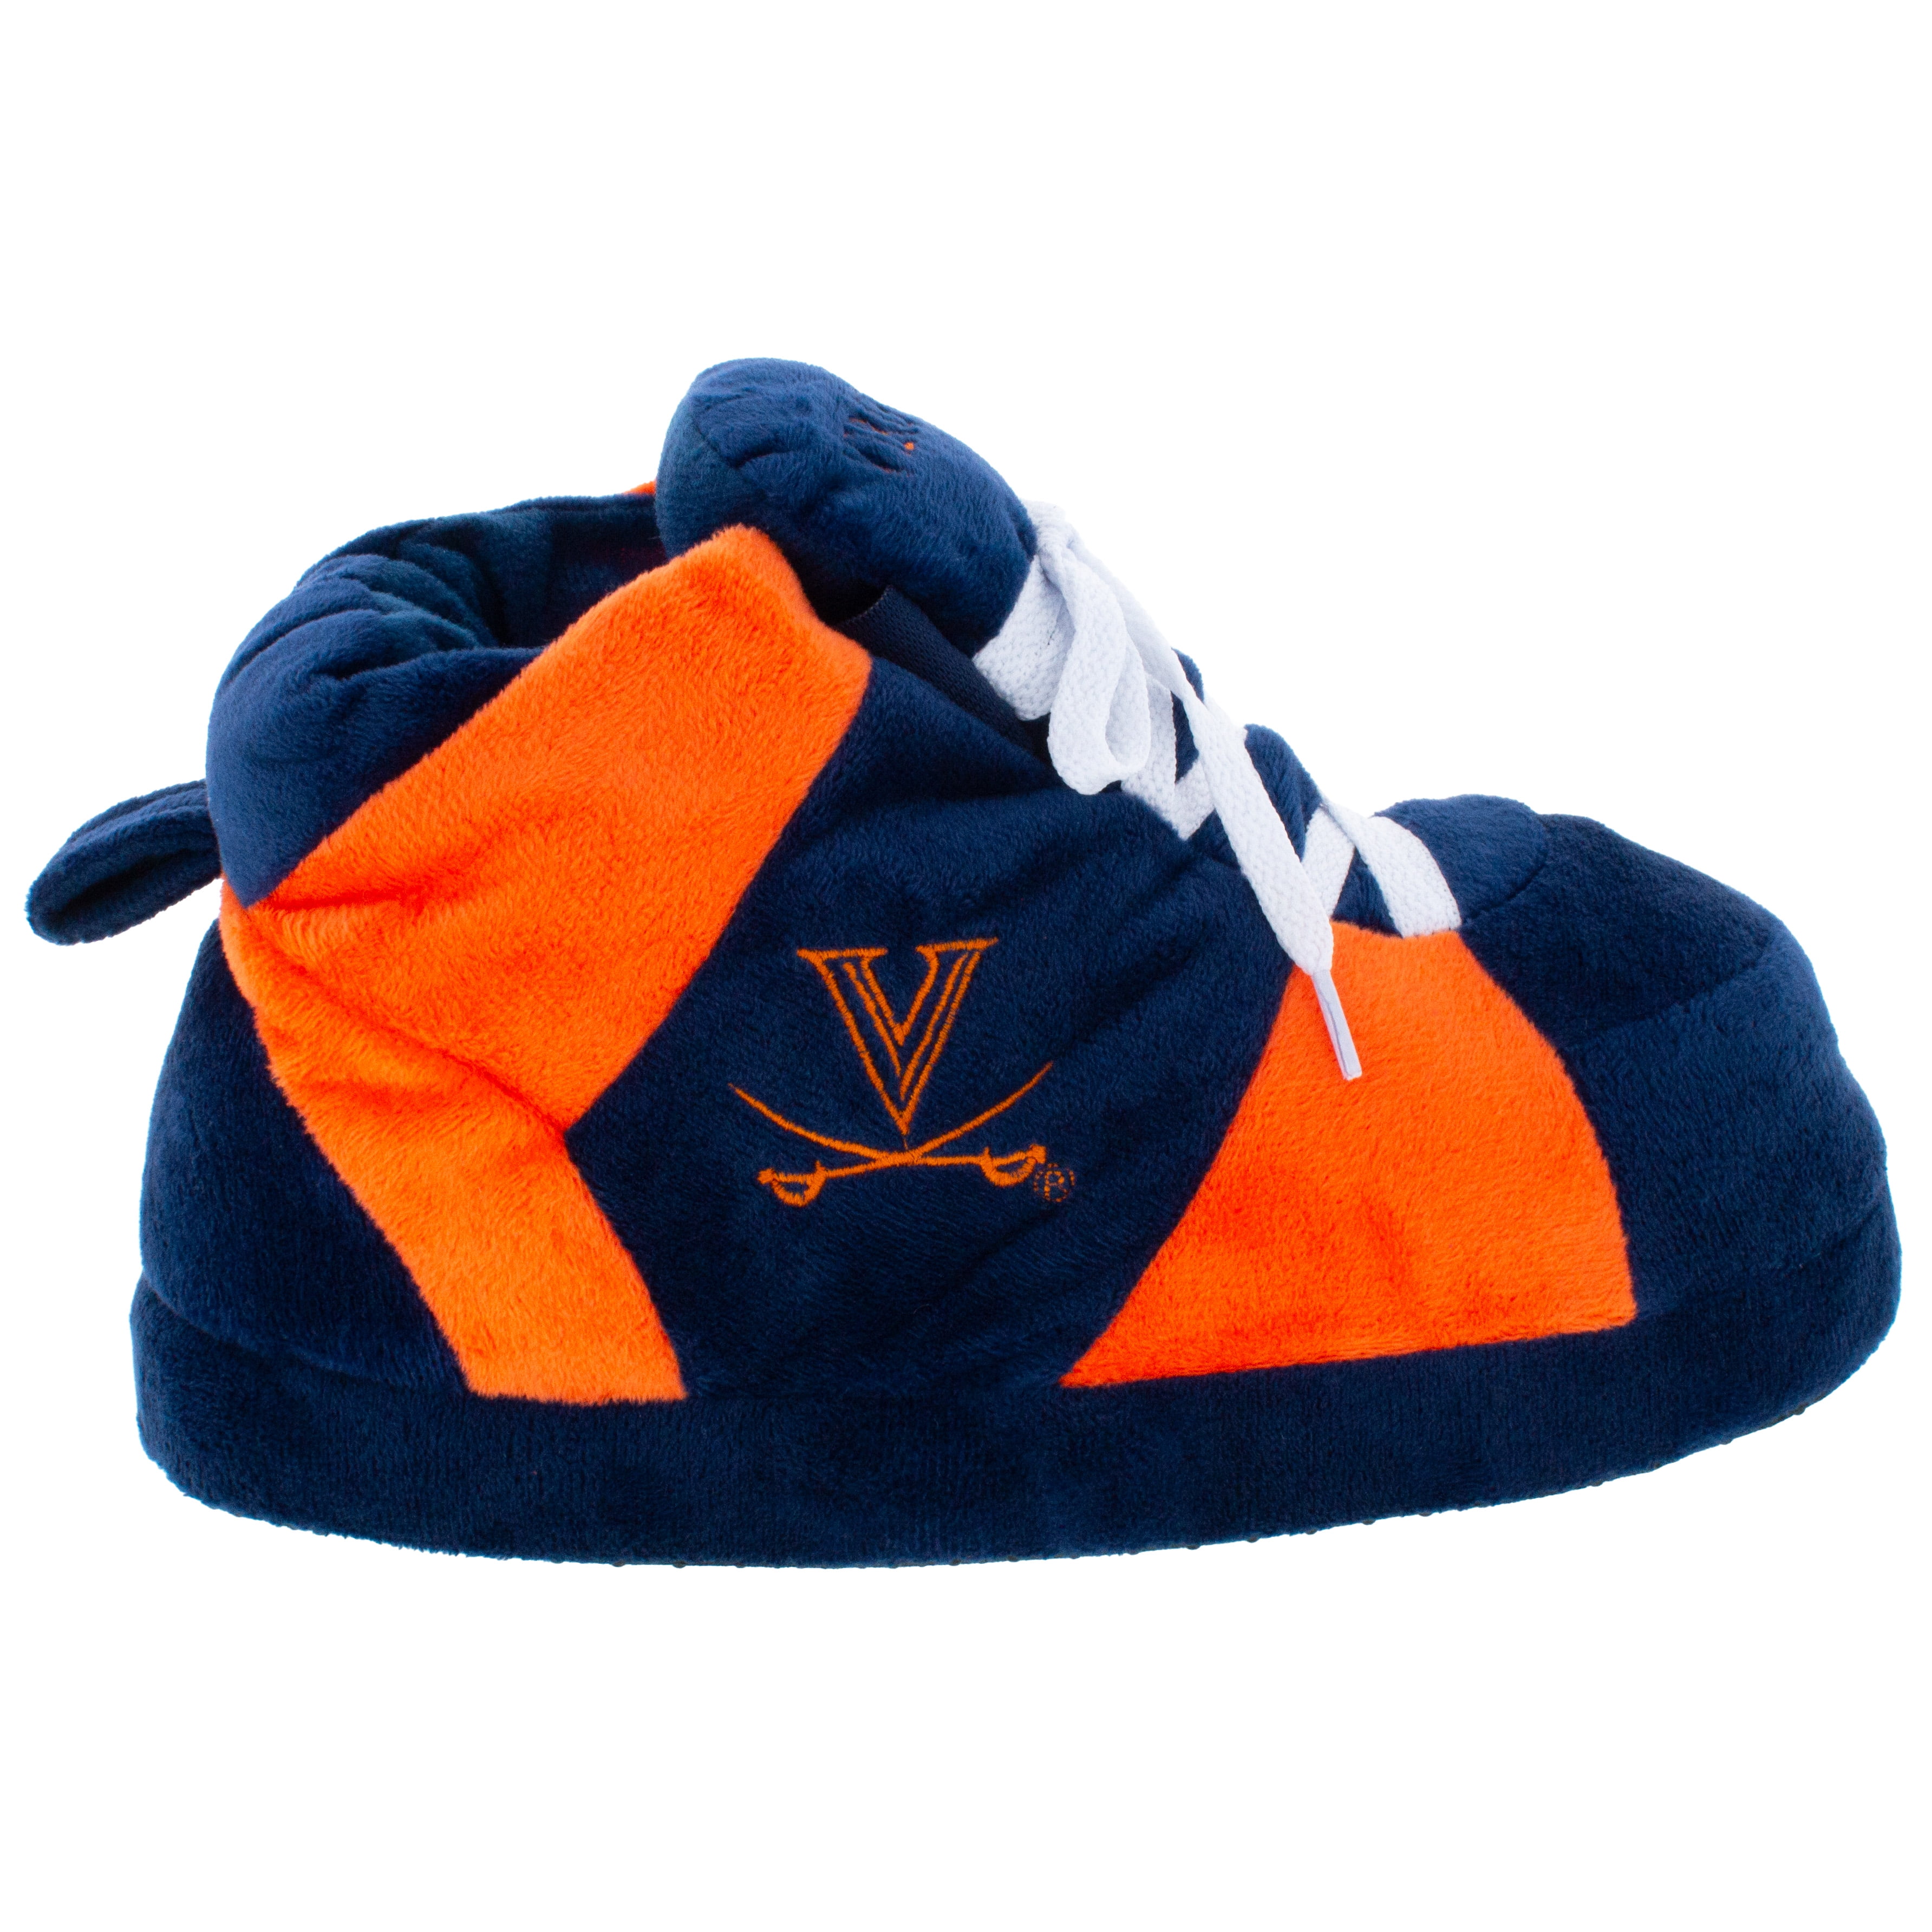 Virginia Cavaliers Original Comfy Feet Sneaker Slipper, Large